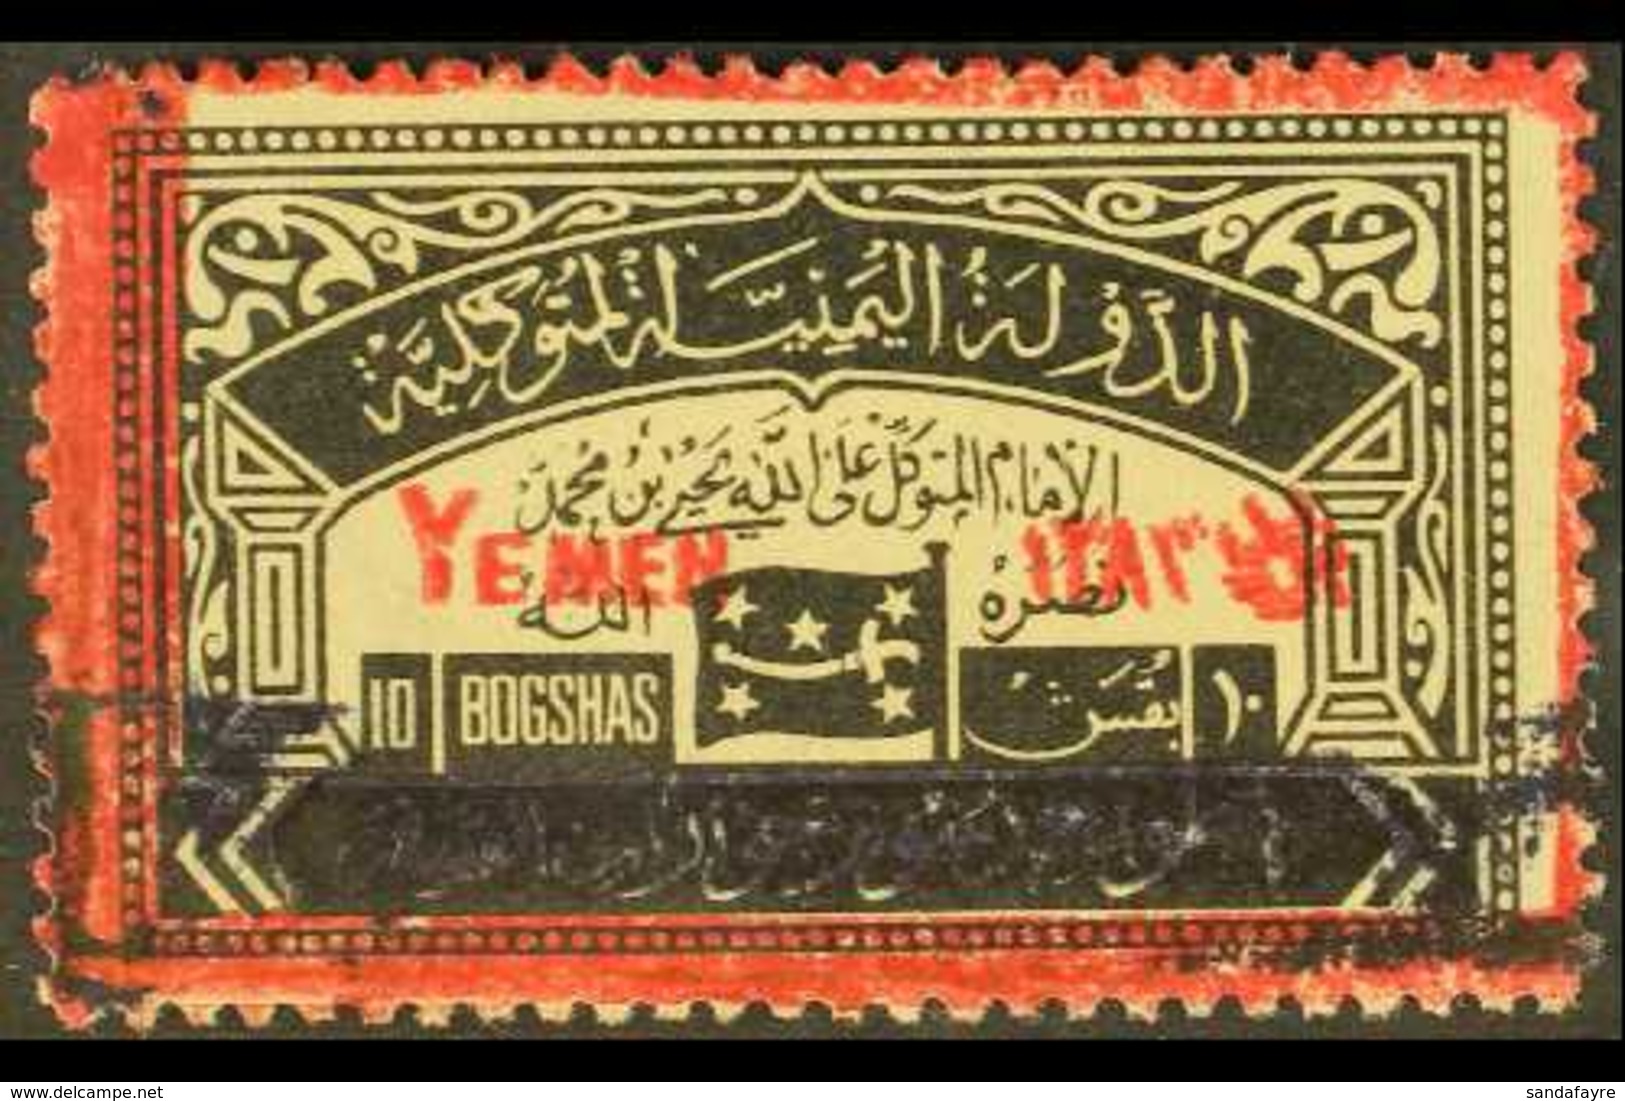 ROYALIST CIVIL WAR ISSUES 1963 10b Black And Carmine, Consular Stamp Overprinted "Yemen" And "Postage 1383" In Orange Re - Yemen